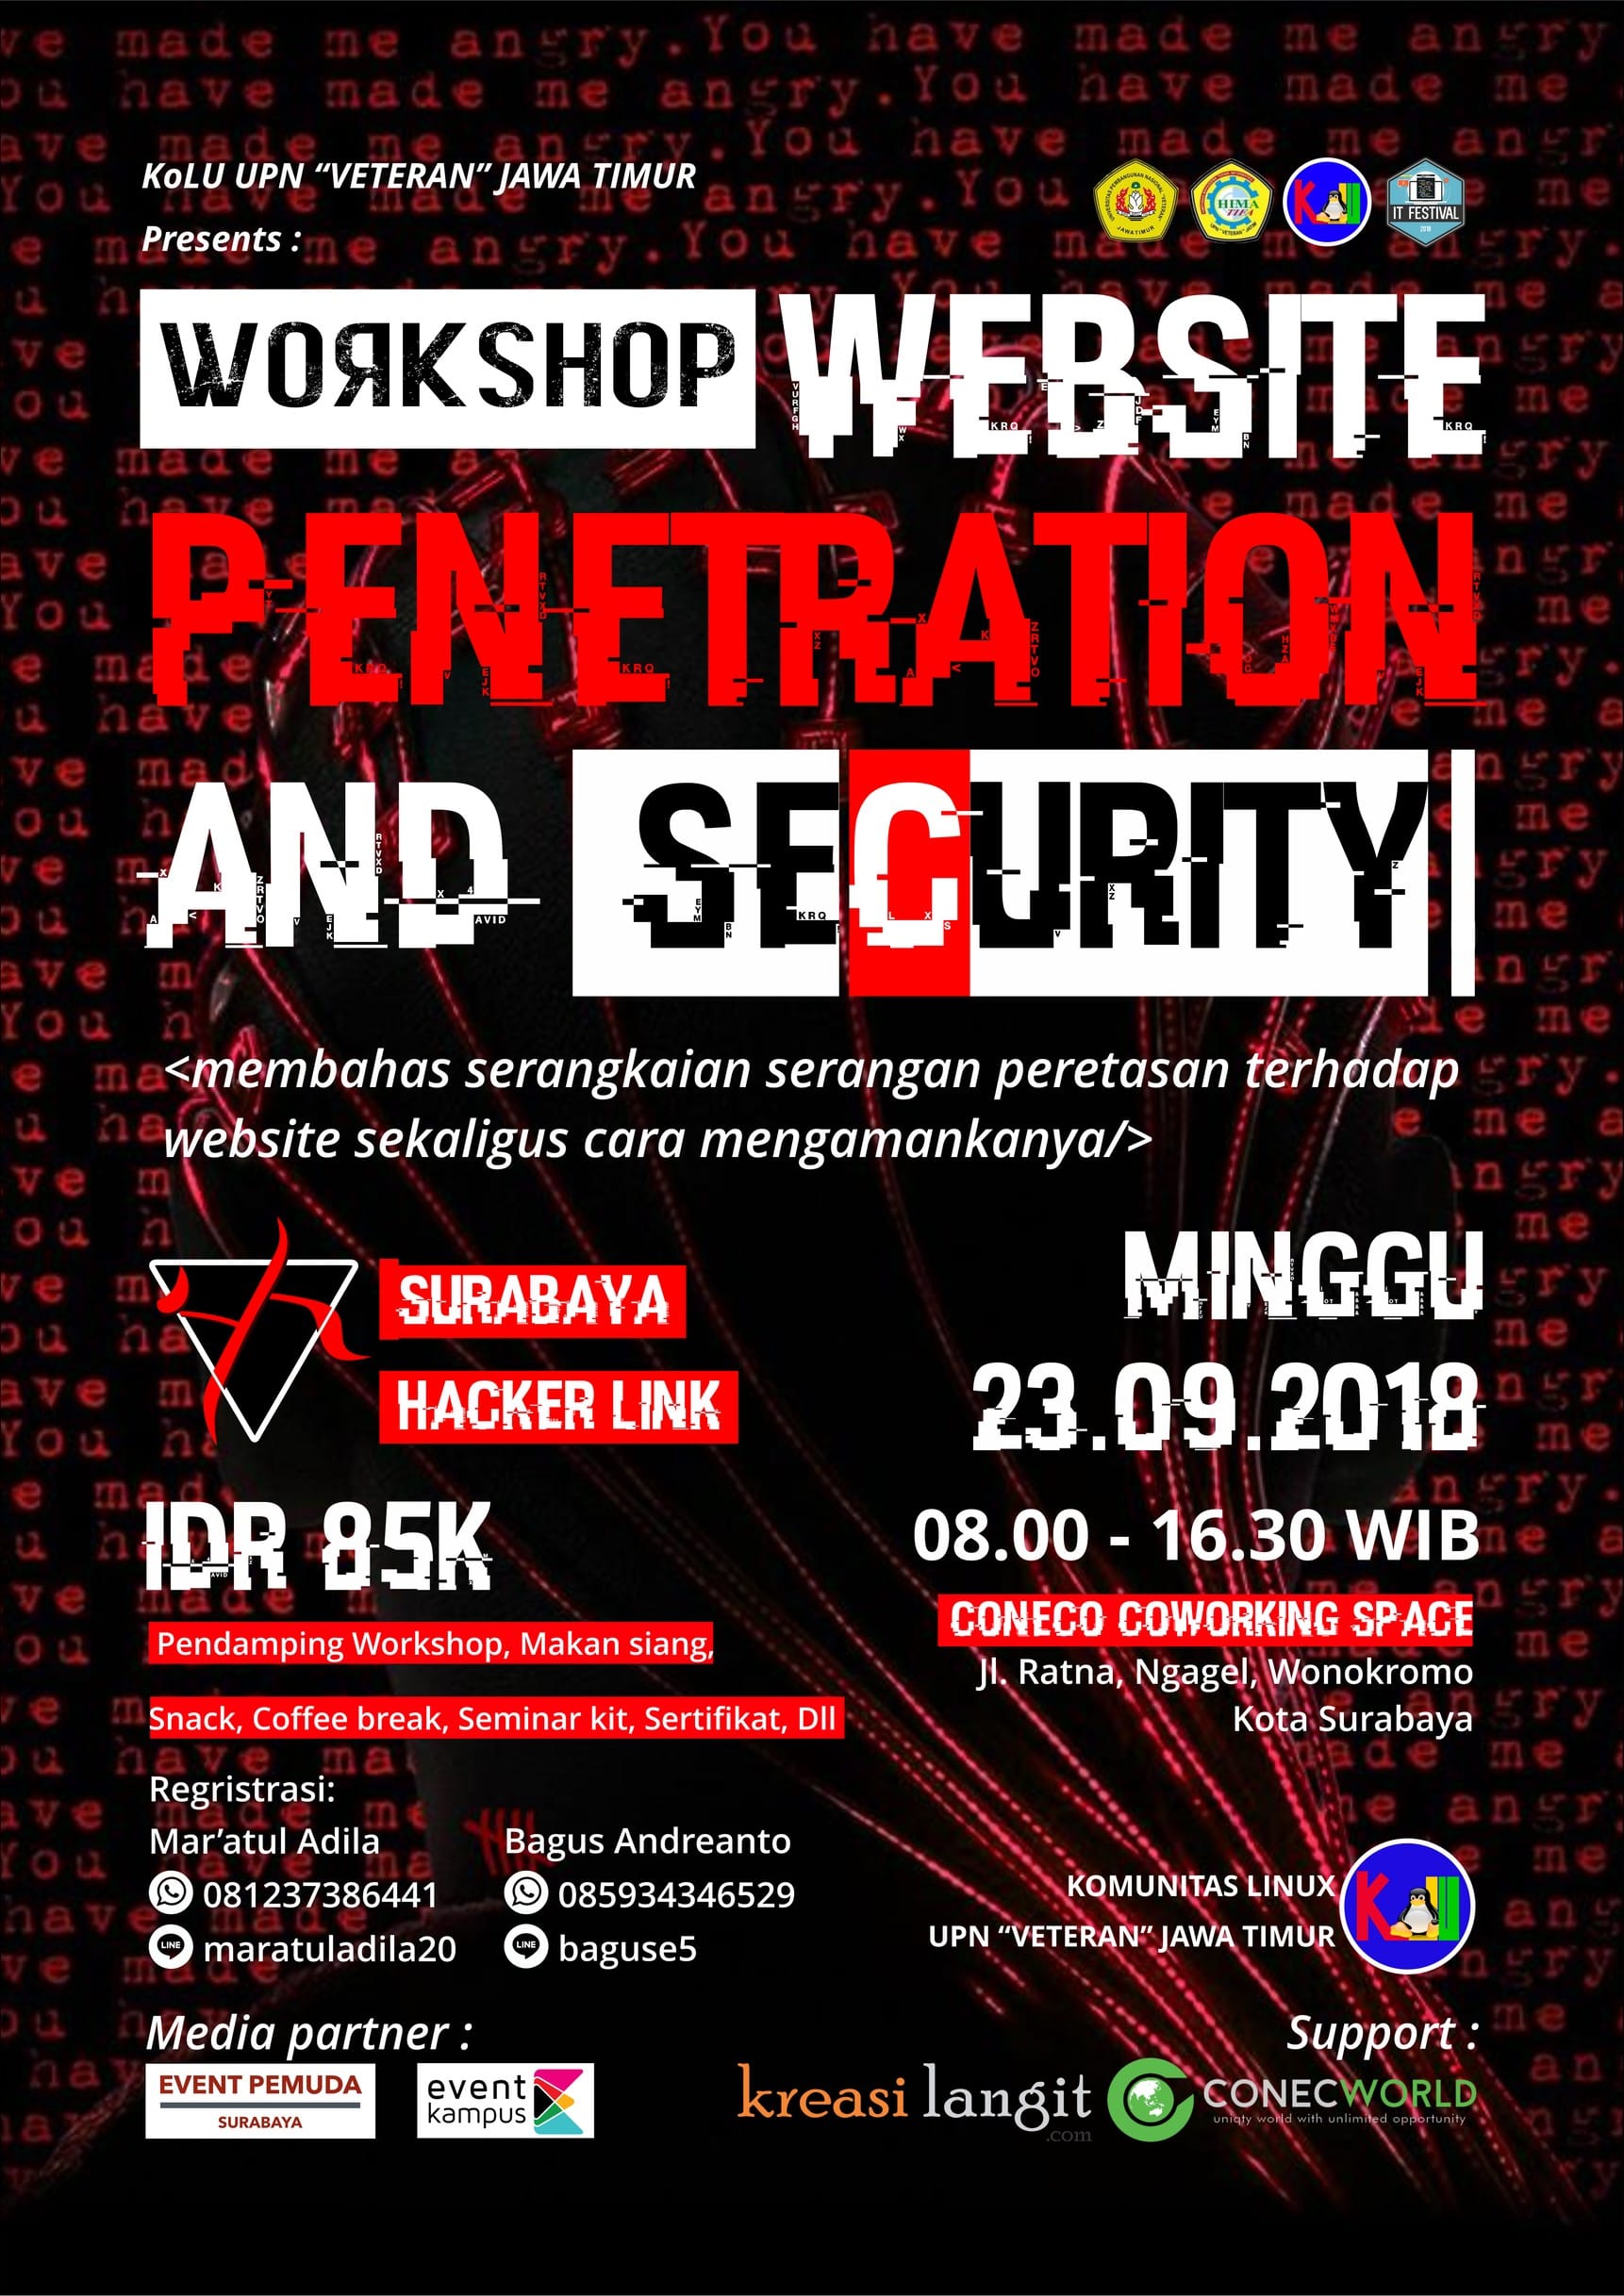 Poster Workshop Website Penetration and Security